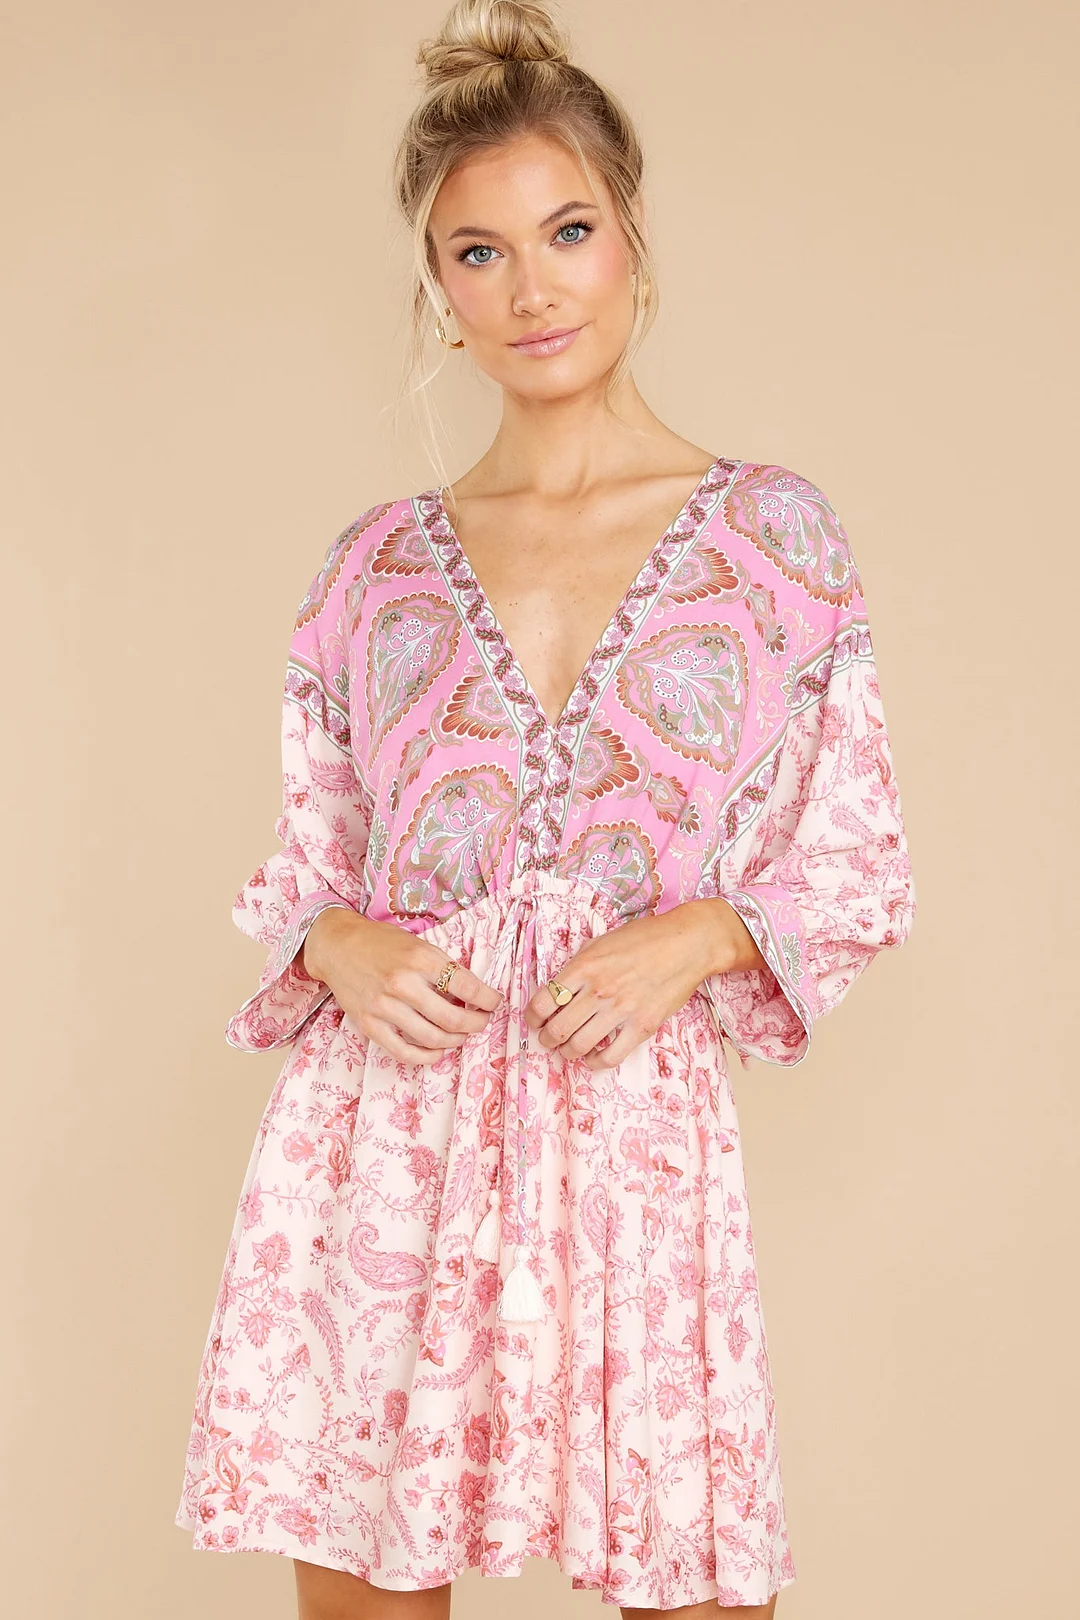 My Heart's Calling Pink Multi Print Dress